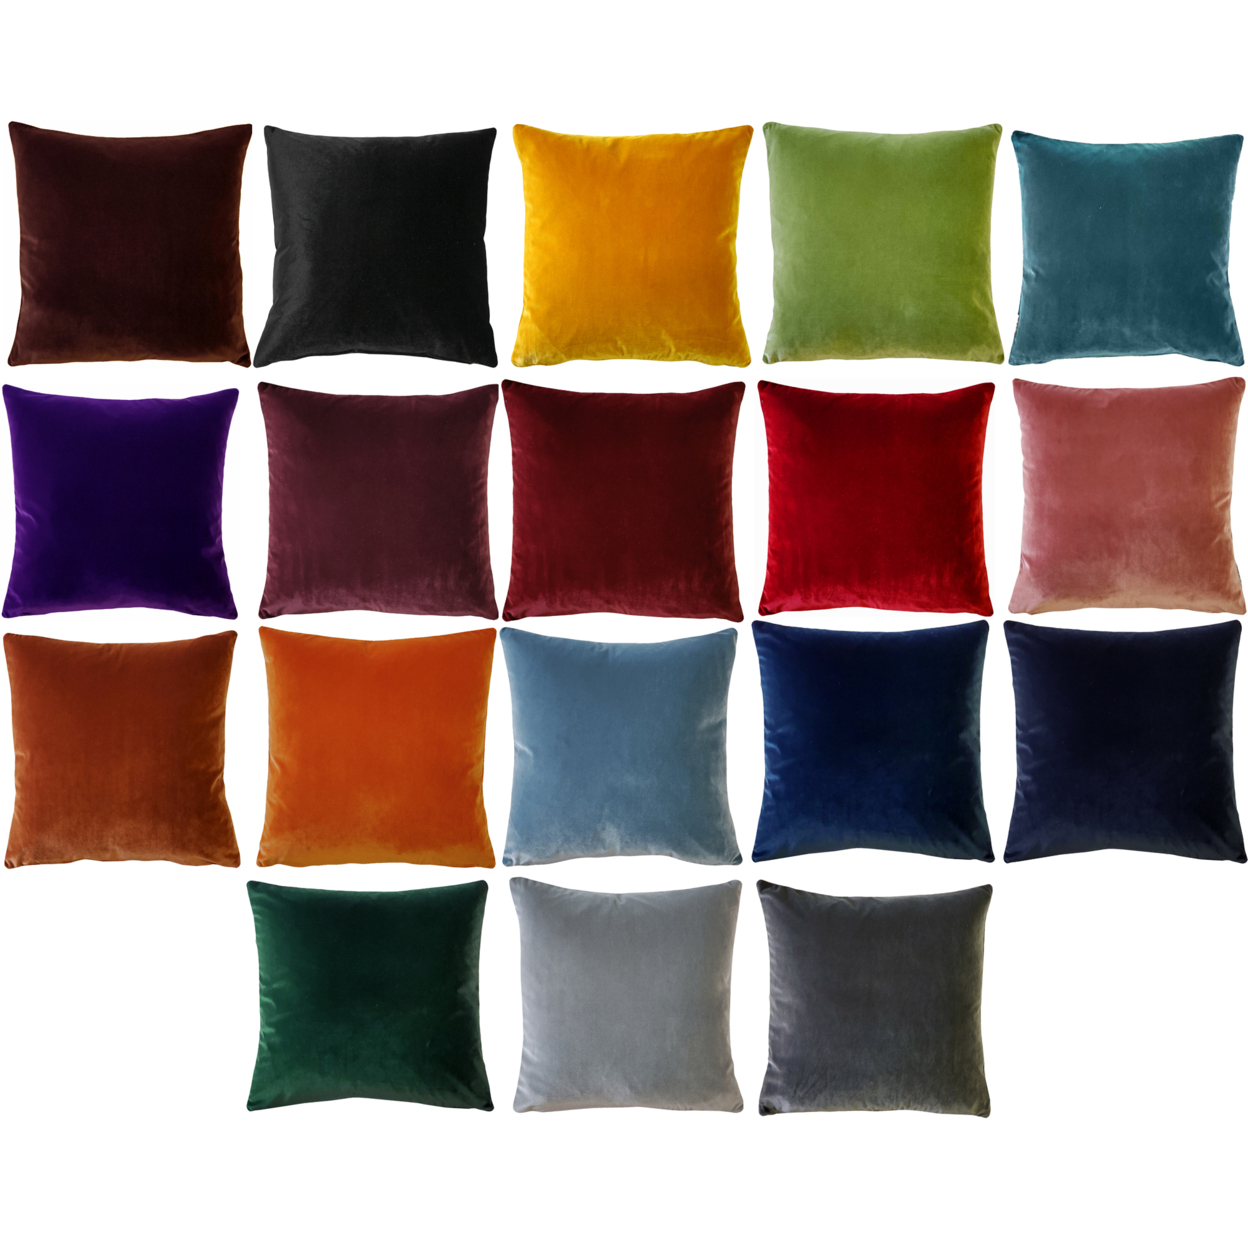 Castello Velvet Throw Pillows, Complete Pillow With Polyfill Pillow Insert (18 Colors, 3 Sizes) - Burgundy, 17x17